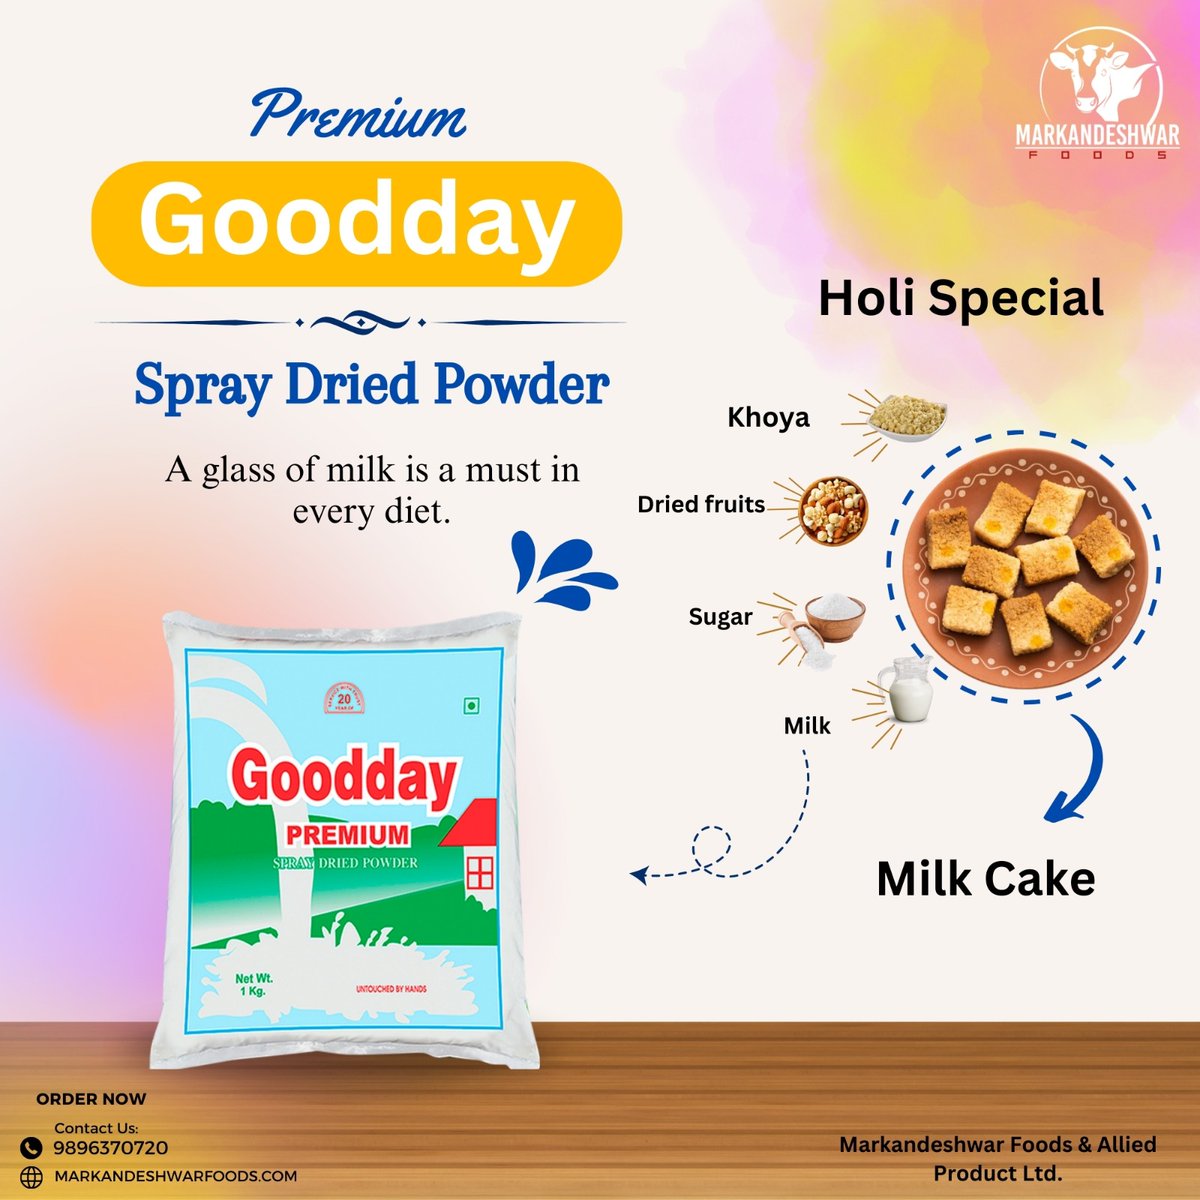 GOODDAY MILK POWDER
Enjoy the delicious milk cake this Holi 
#GooddayPremiumMilk

Markandeshwar Foods & Allied Products Ltd.
For trade inquiry 9896370720, 9729344011, 9810754400.
.
.
#markandeshwarfoods #milk #dairy #dairyproducts #goodday #Healthy #Healthyliving #Haryana #milk